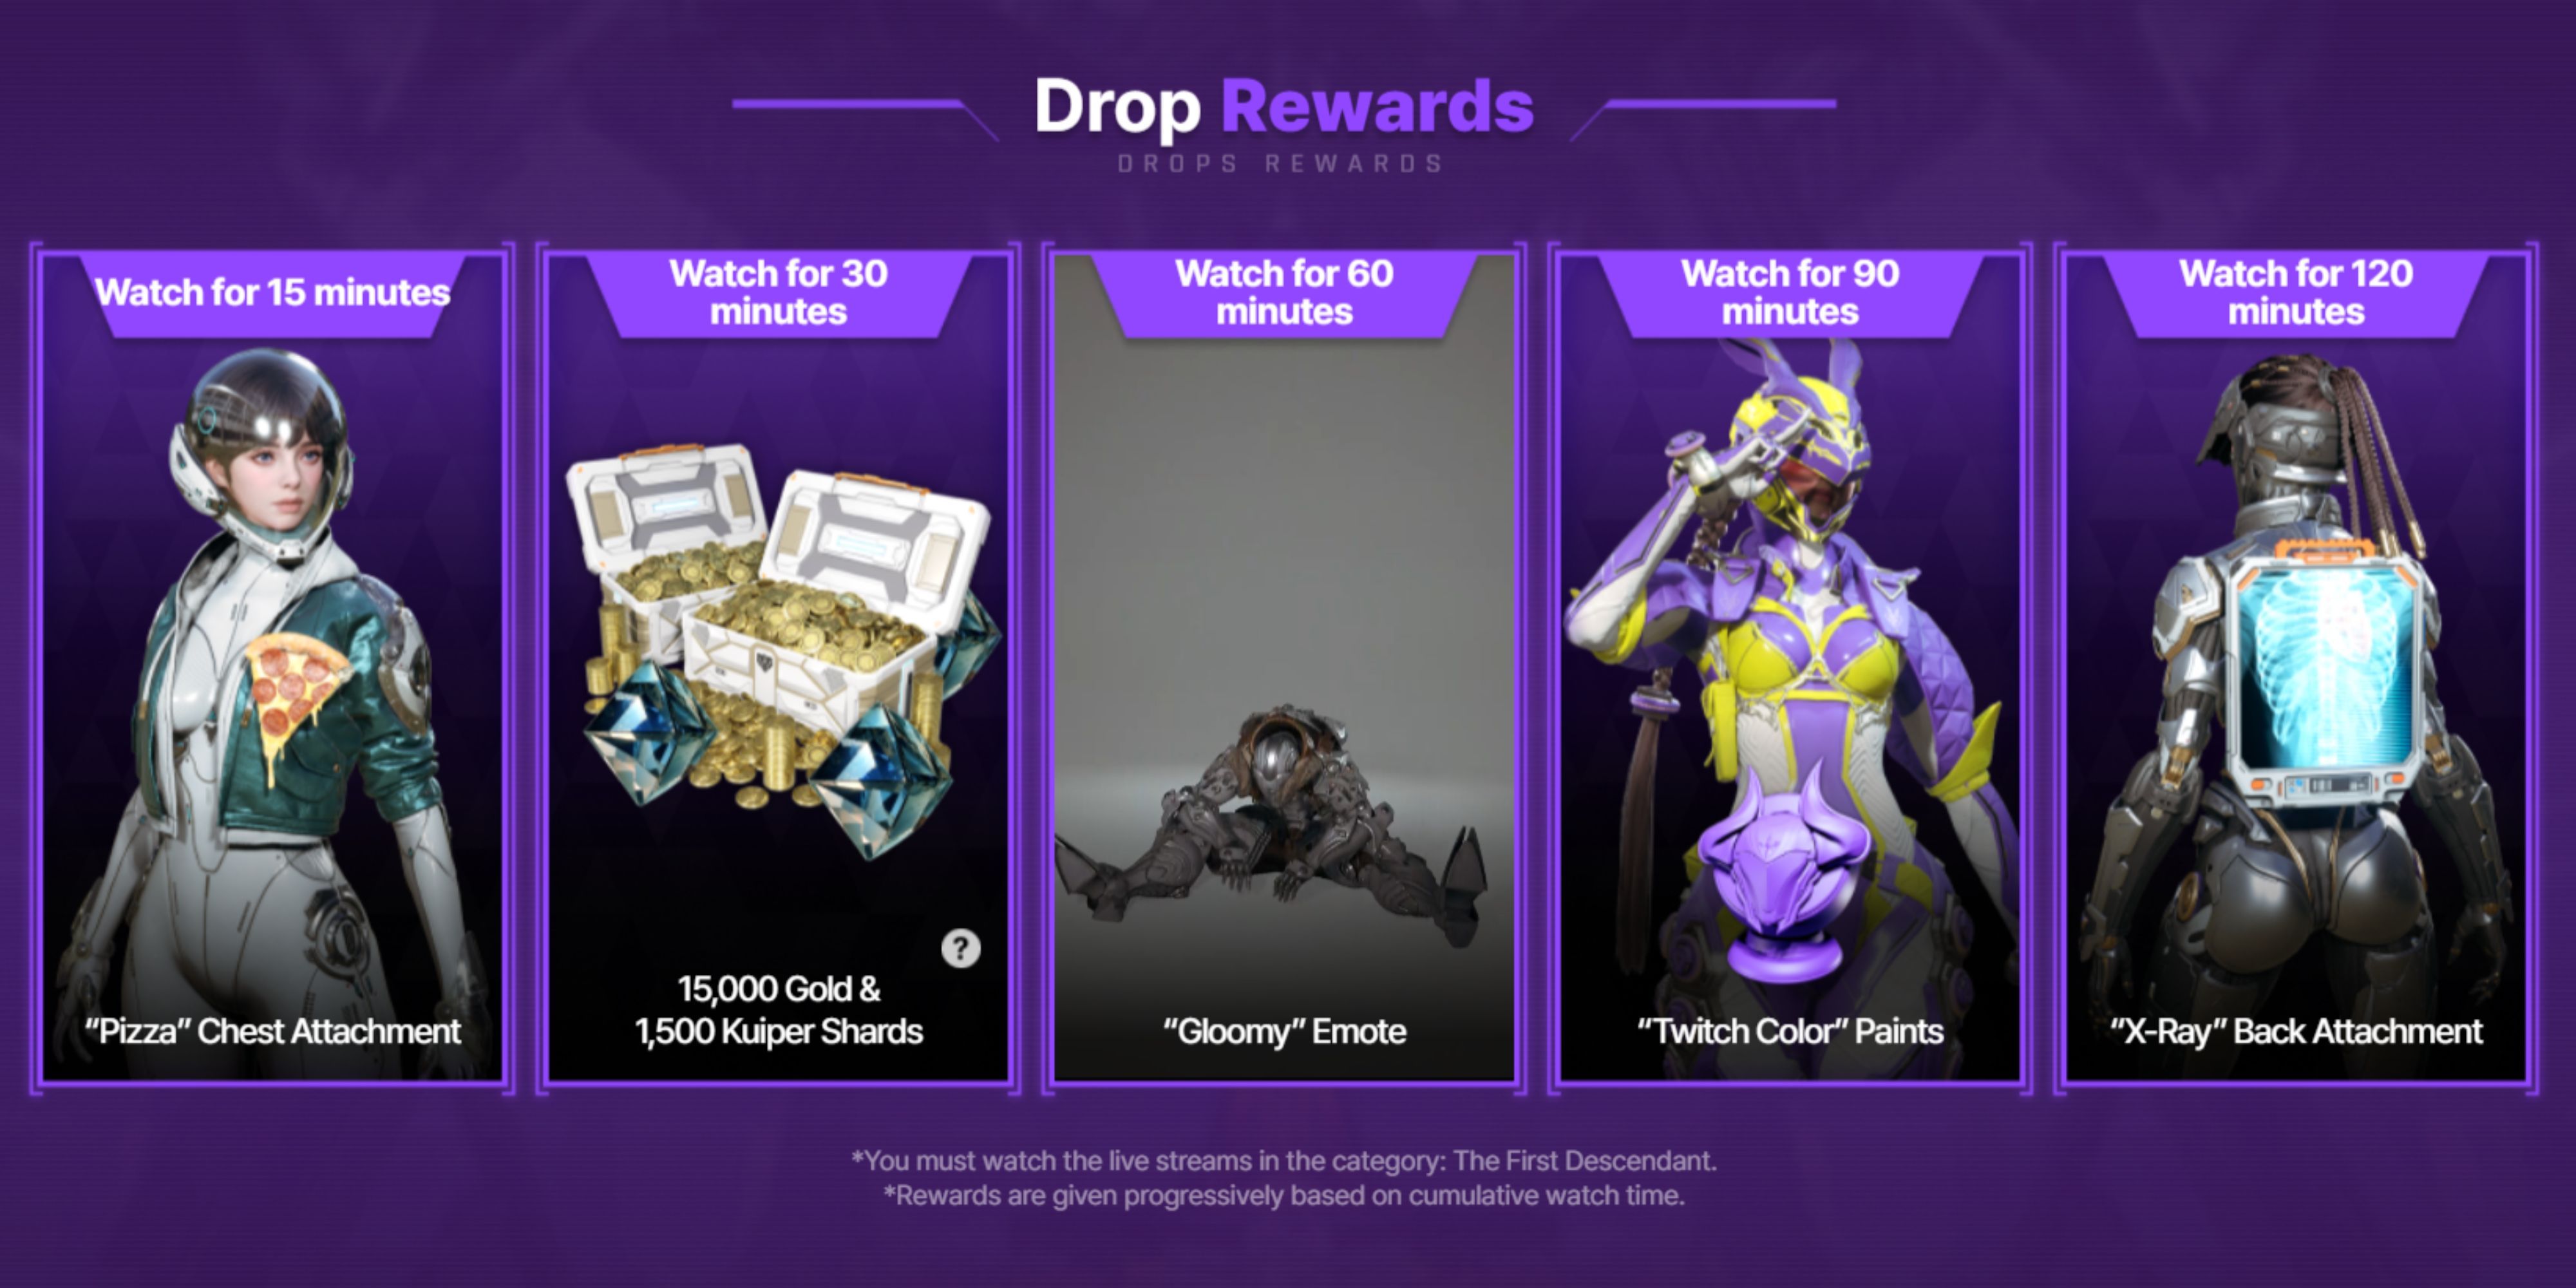 The first Descendant Twitch rewards